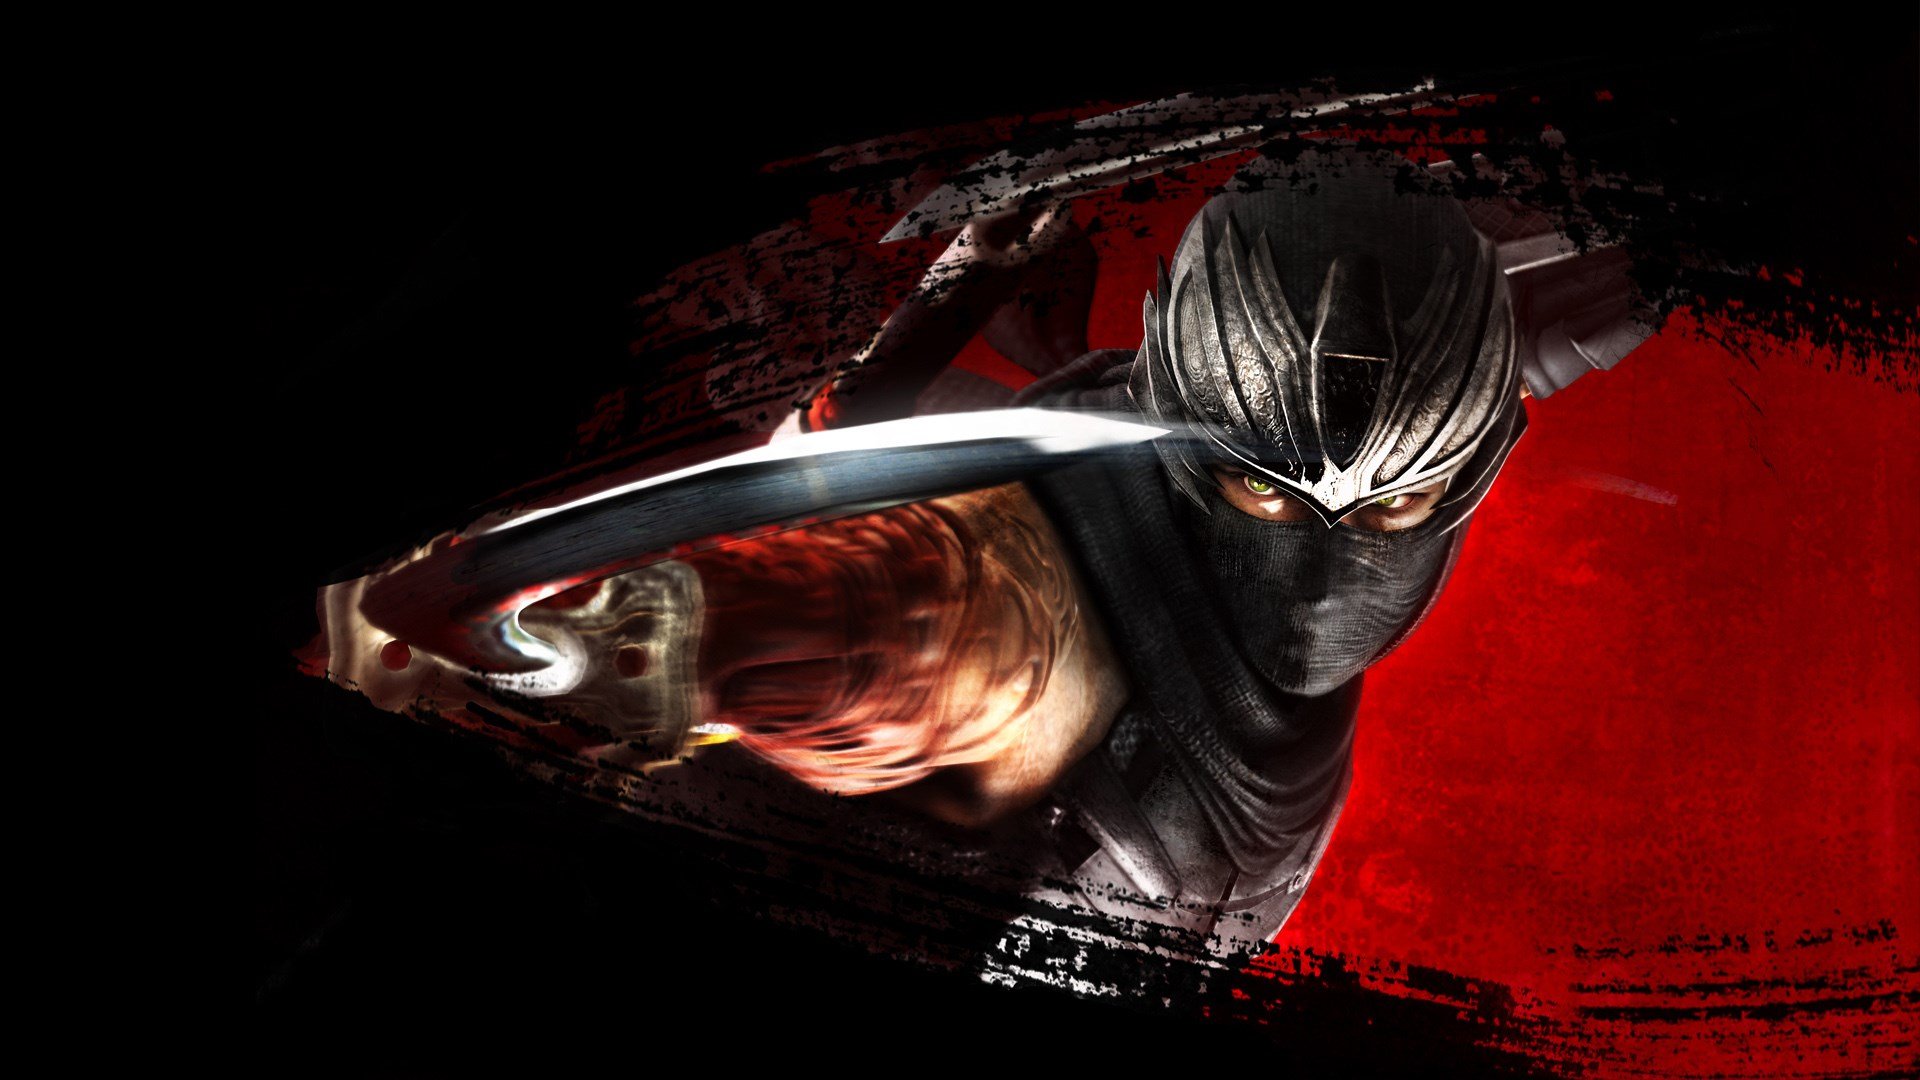 download kasumi ninja gaiden 3 razor